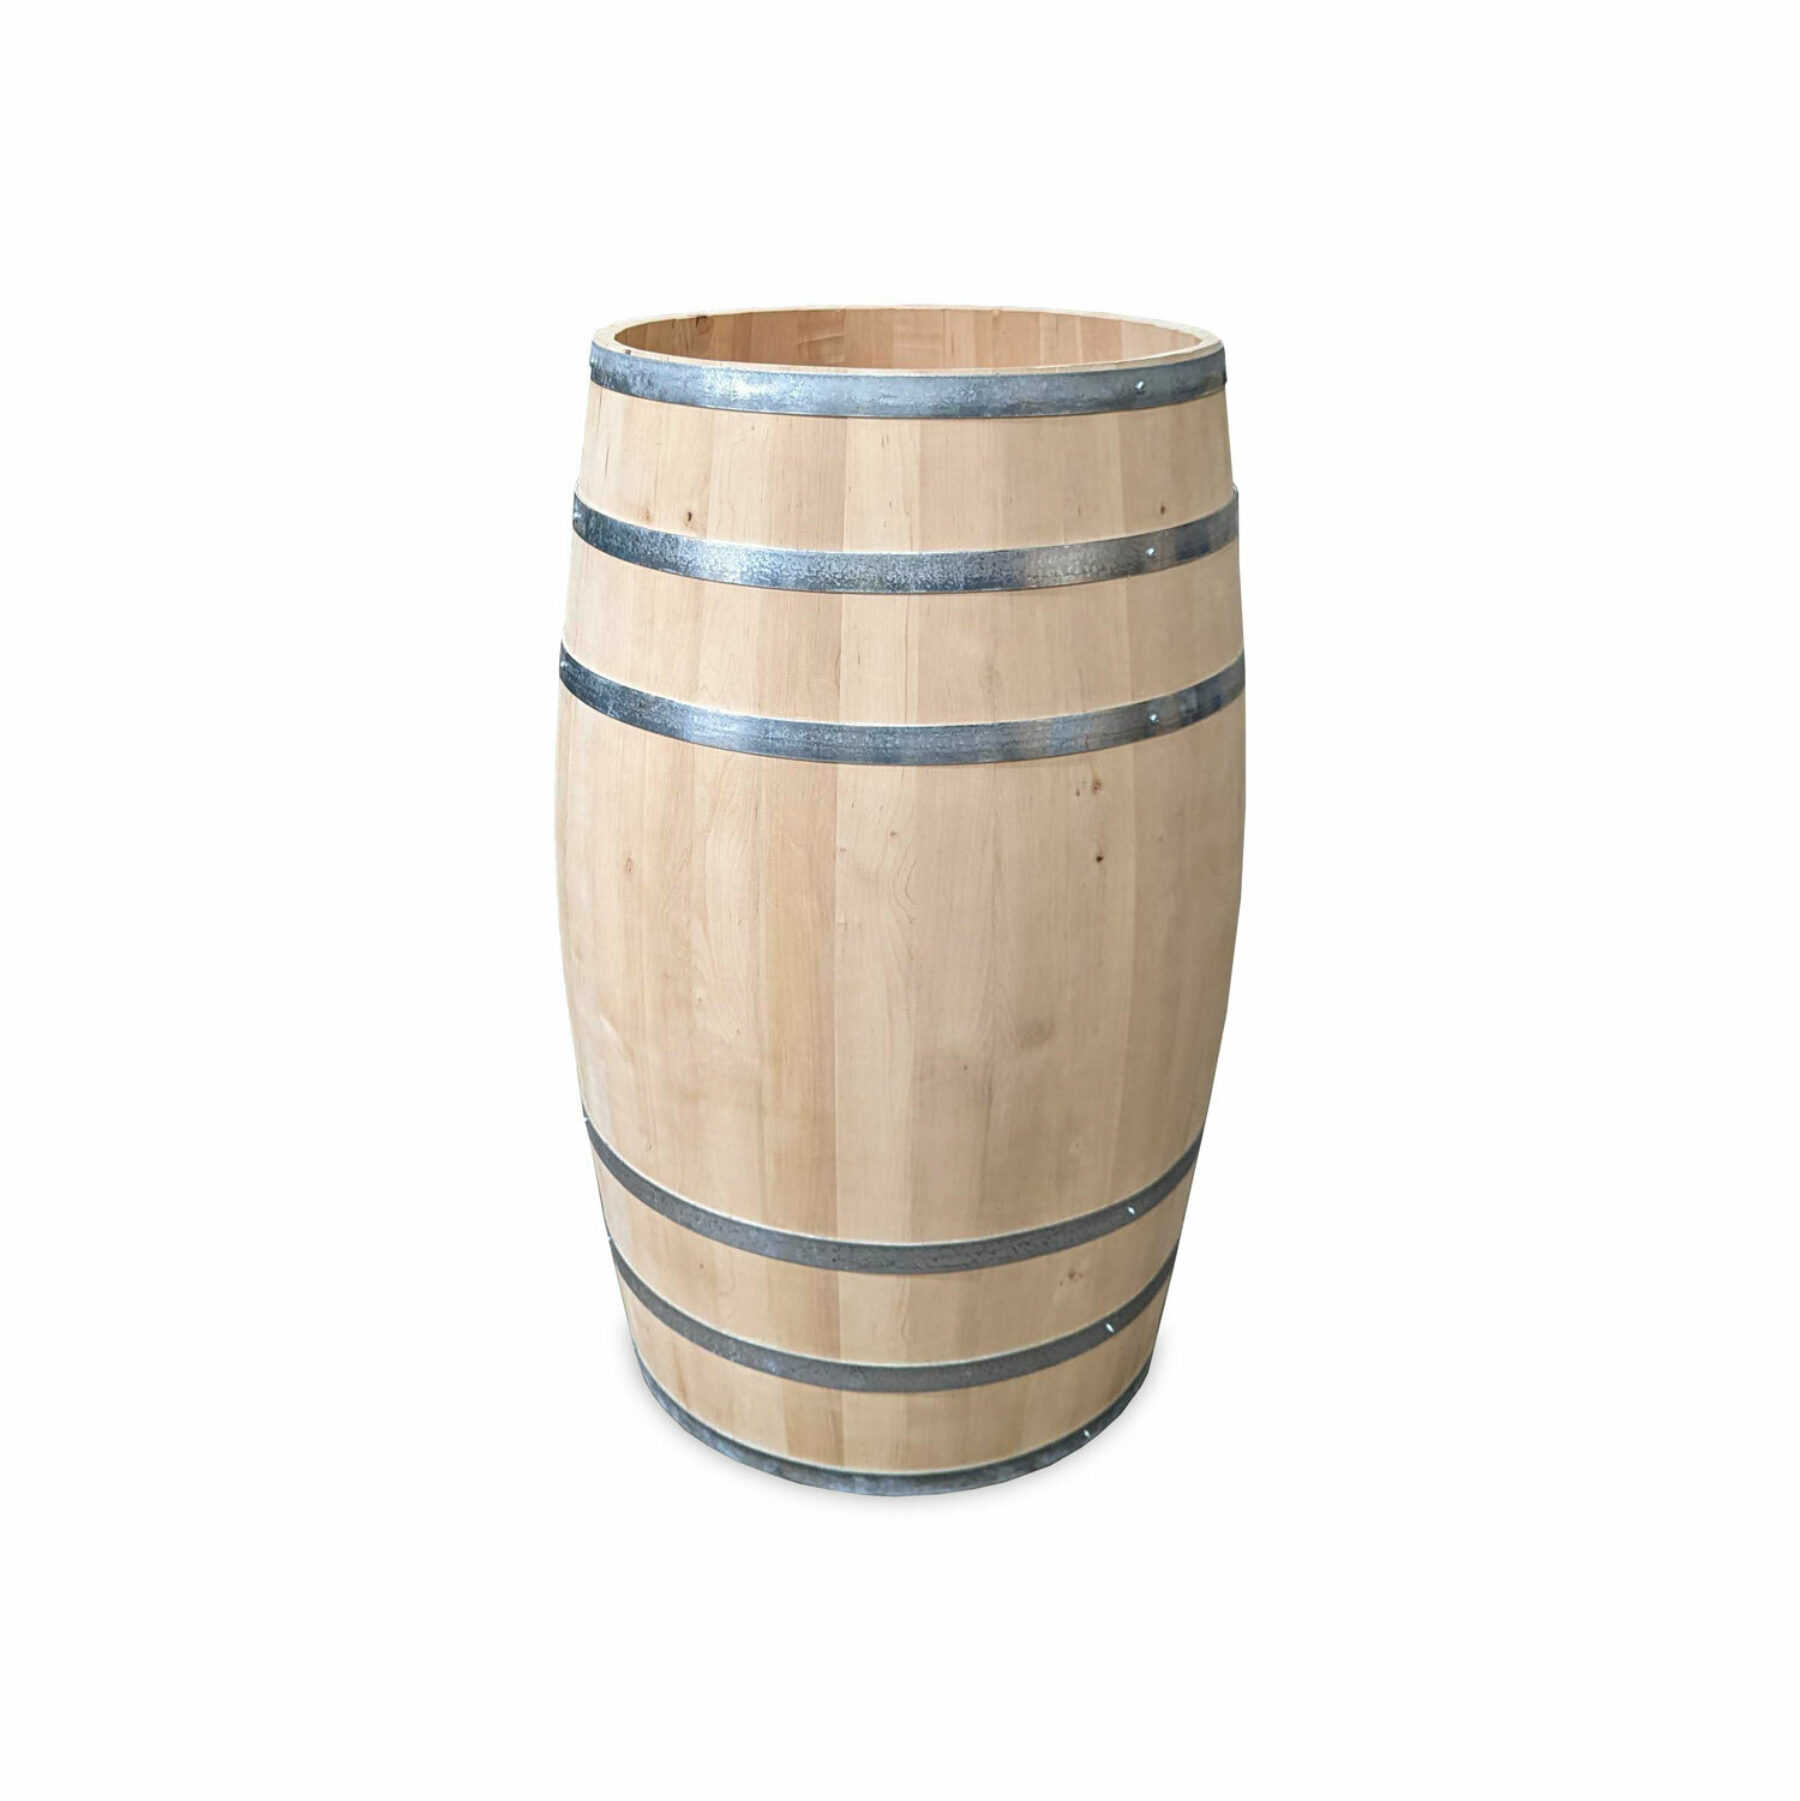 Large Wooden Display Barrel